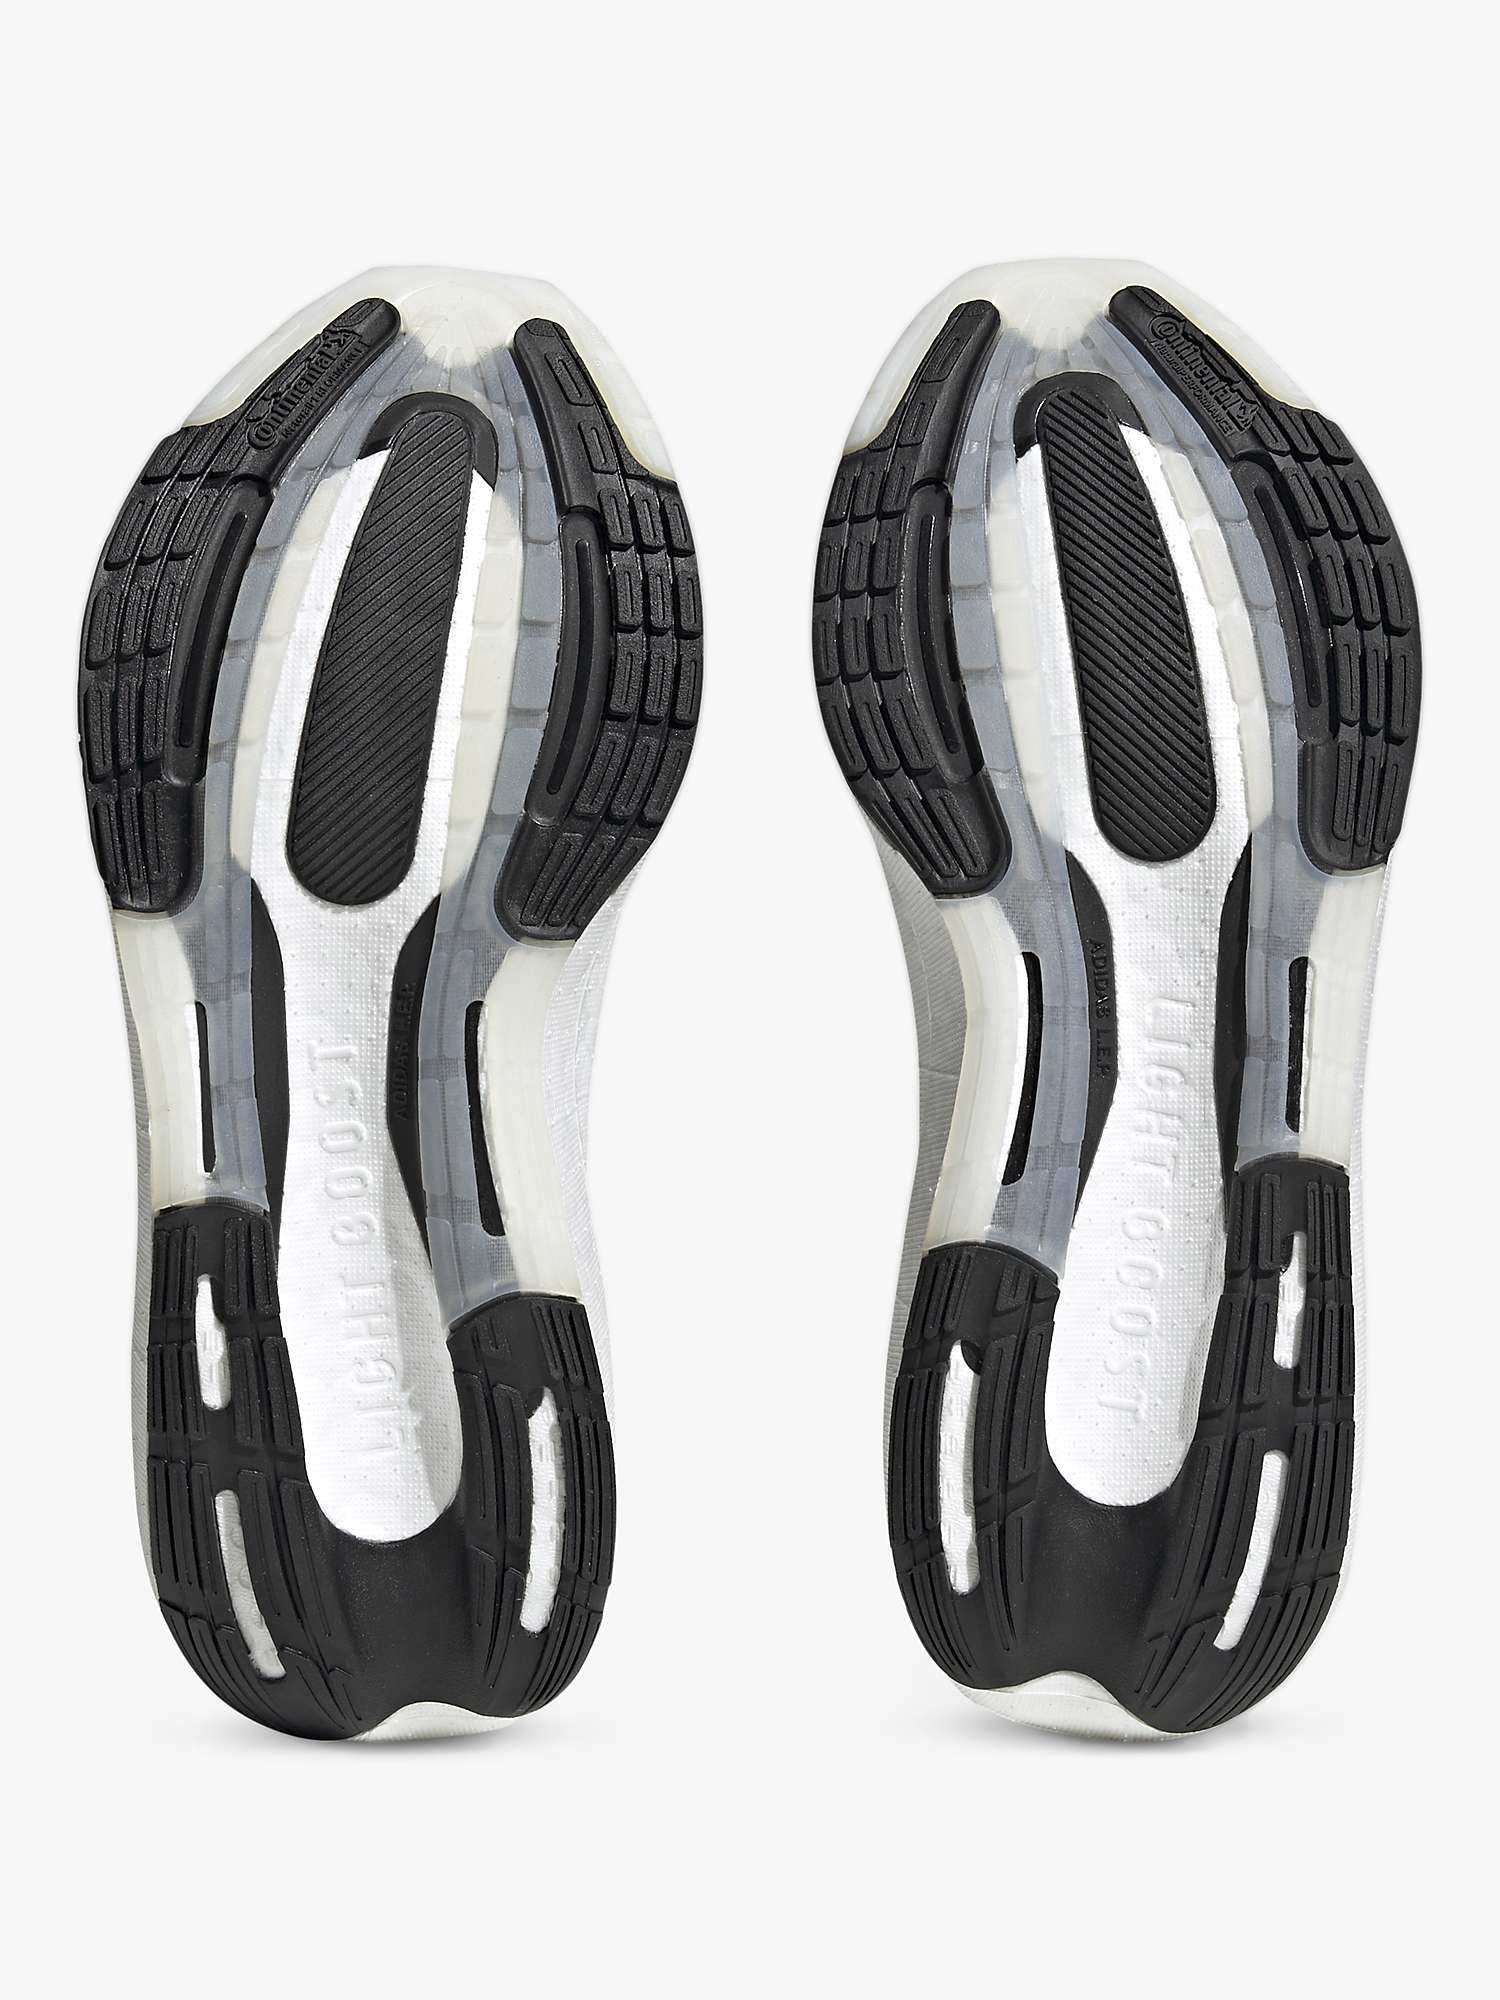 Buy adidas Ultraboost Light Men's Running Shoes Online at johnlewis.com